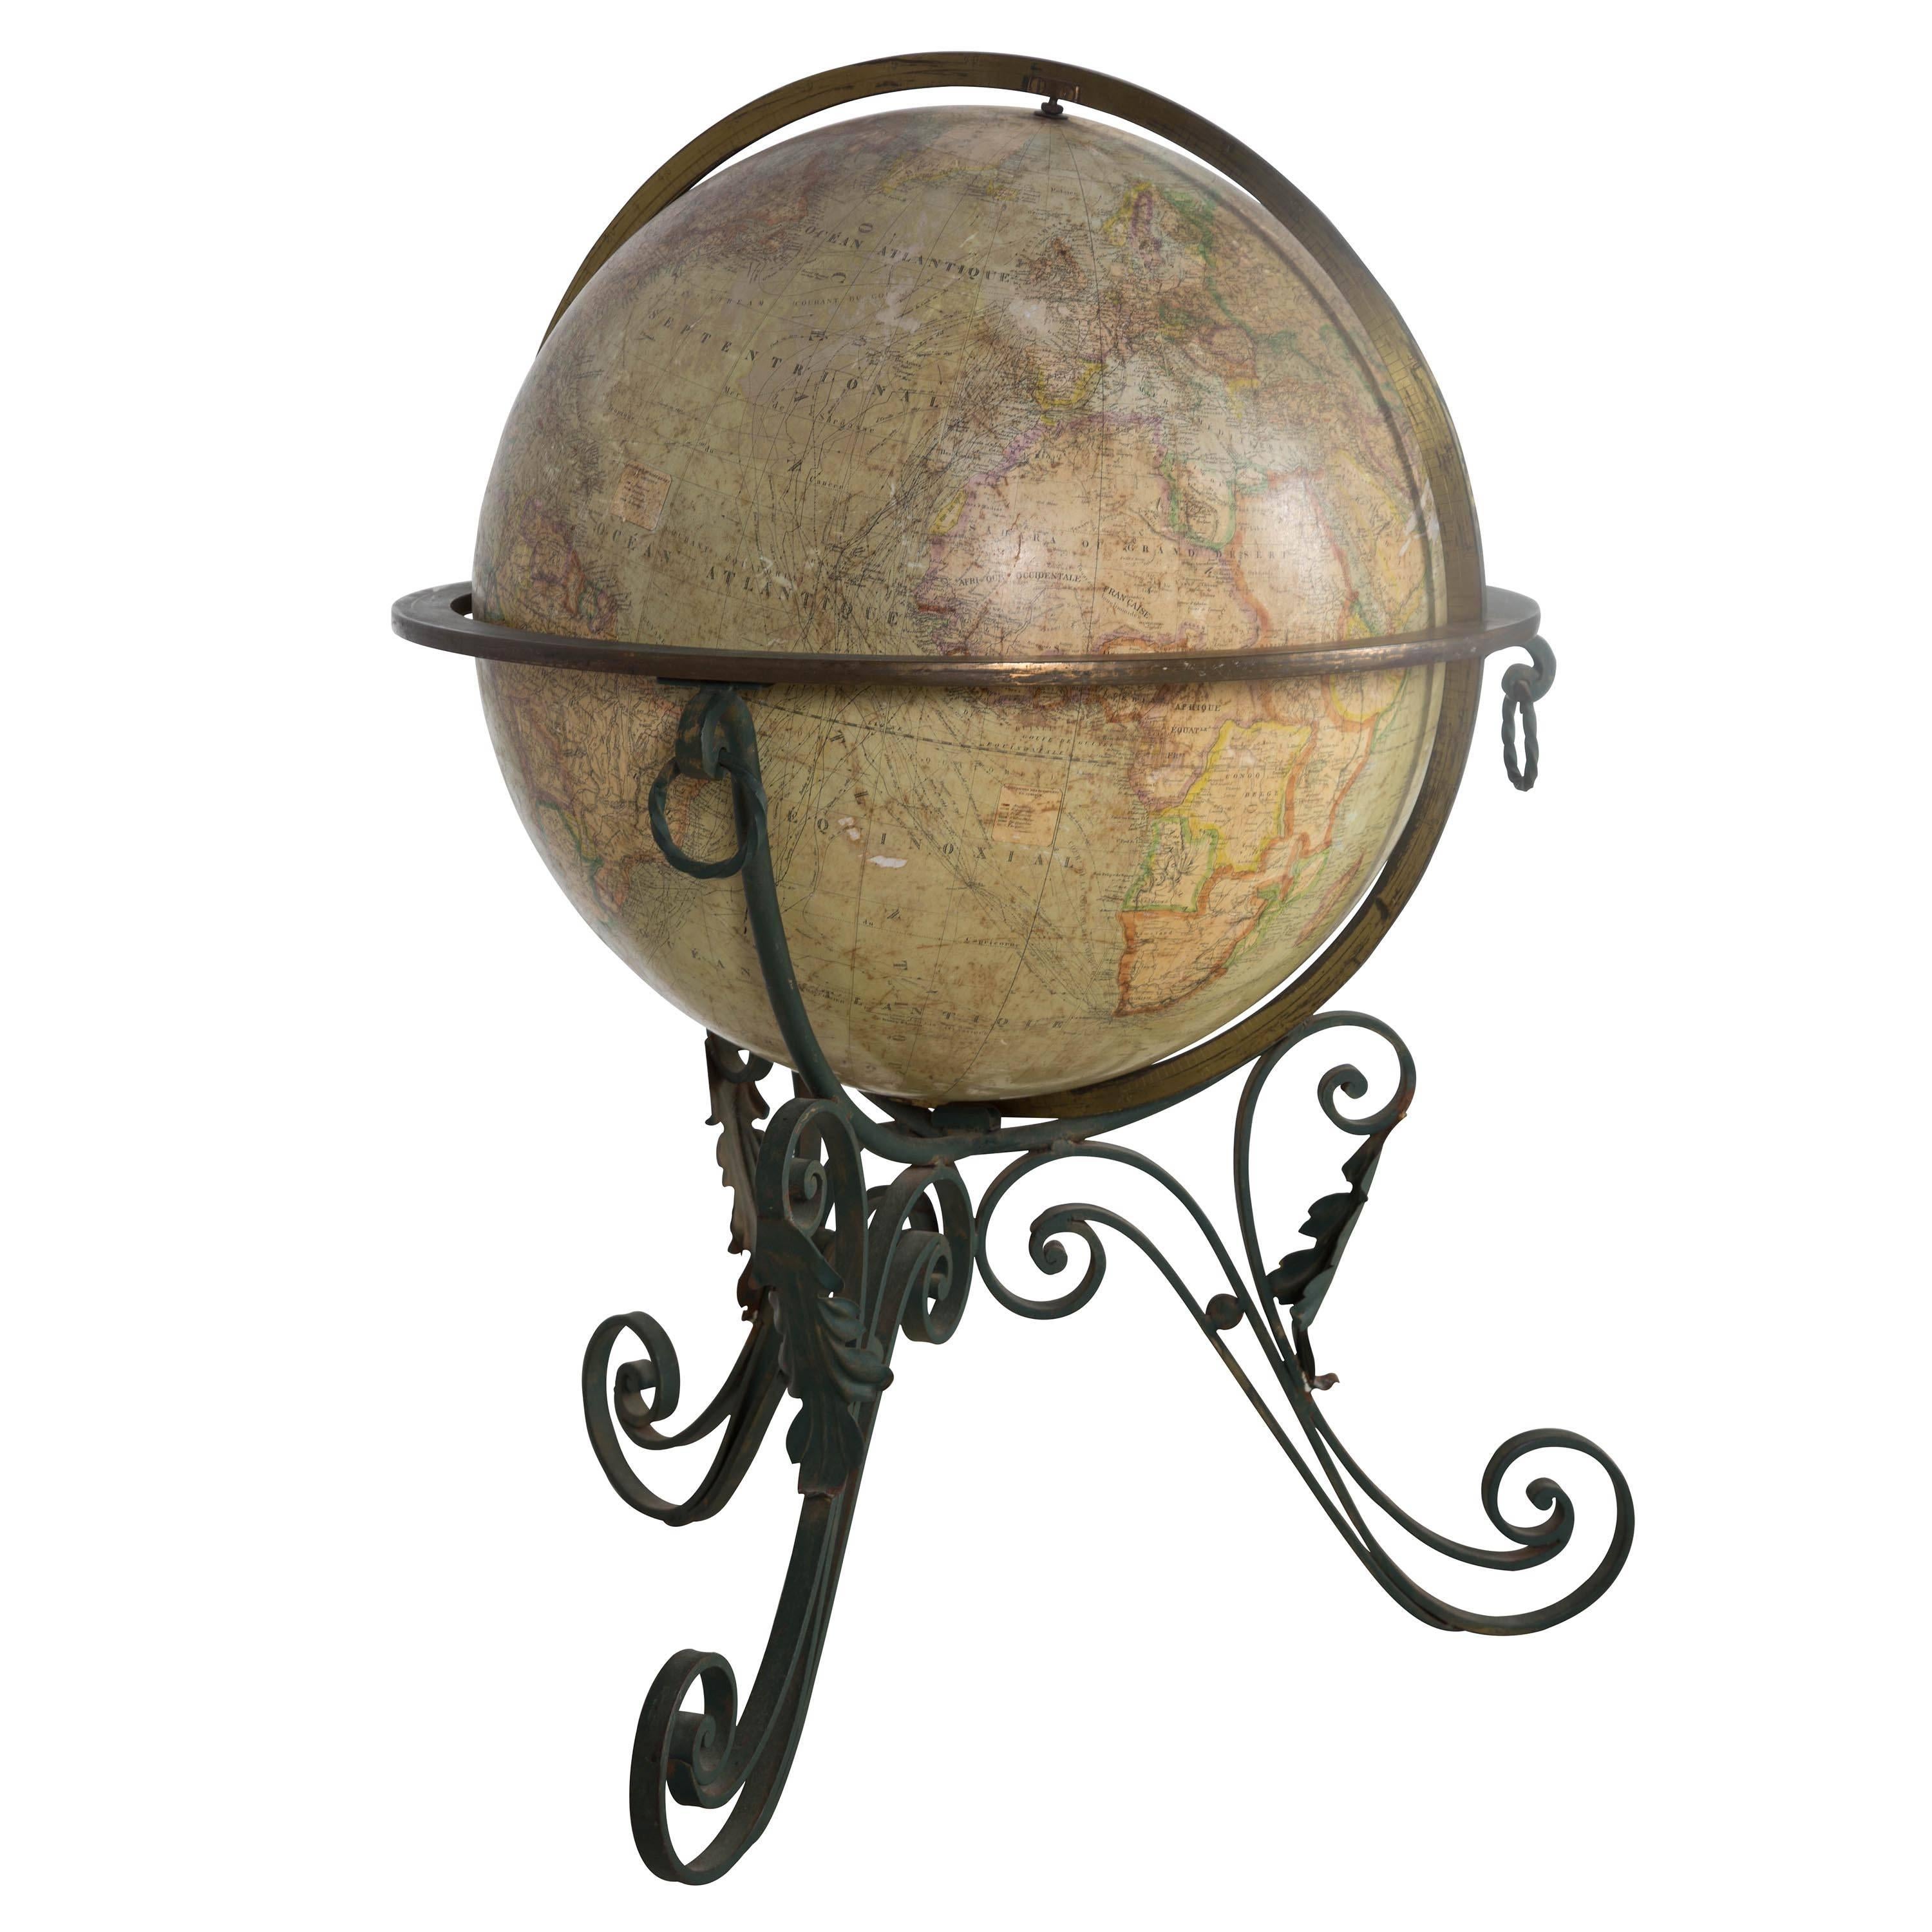 A 19th century terrestrial globe on decorative wrought iron base.